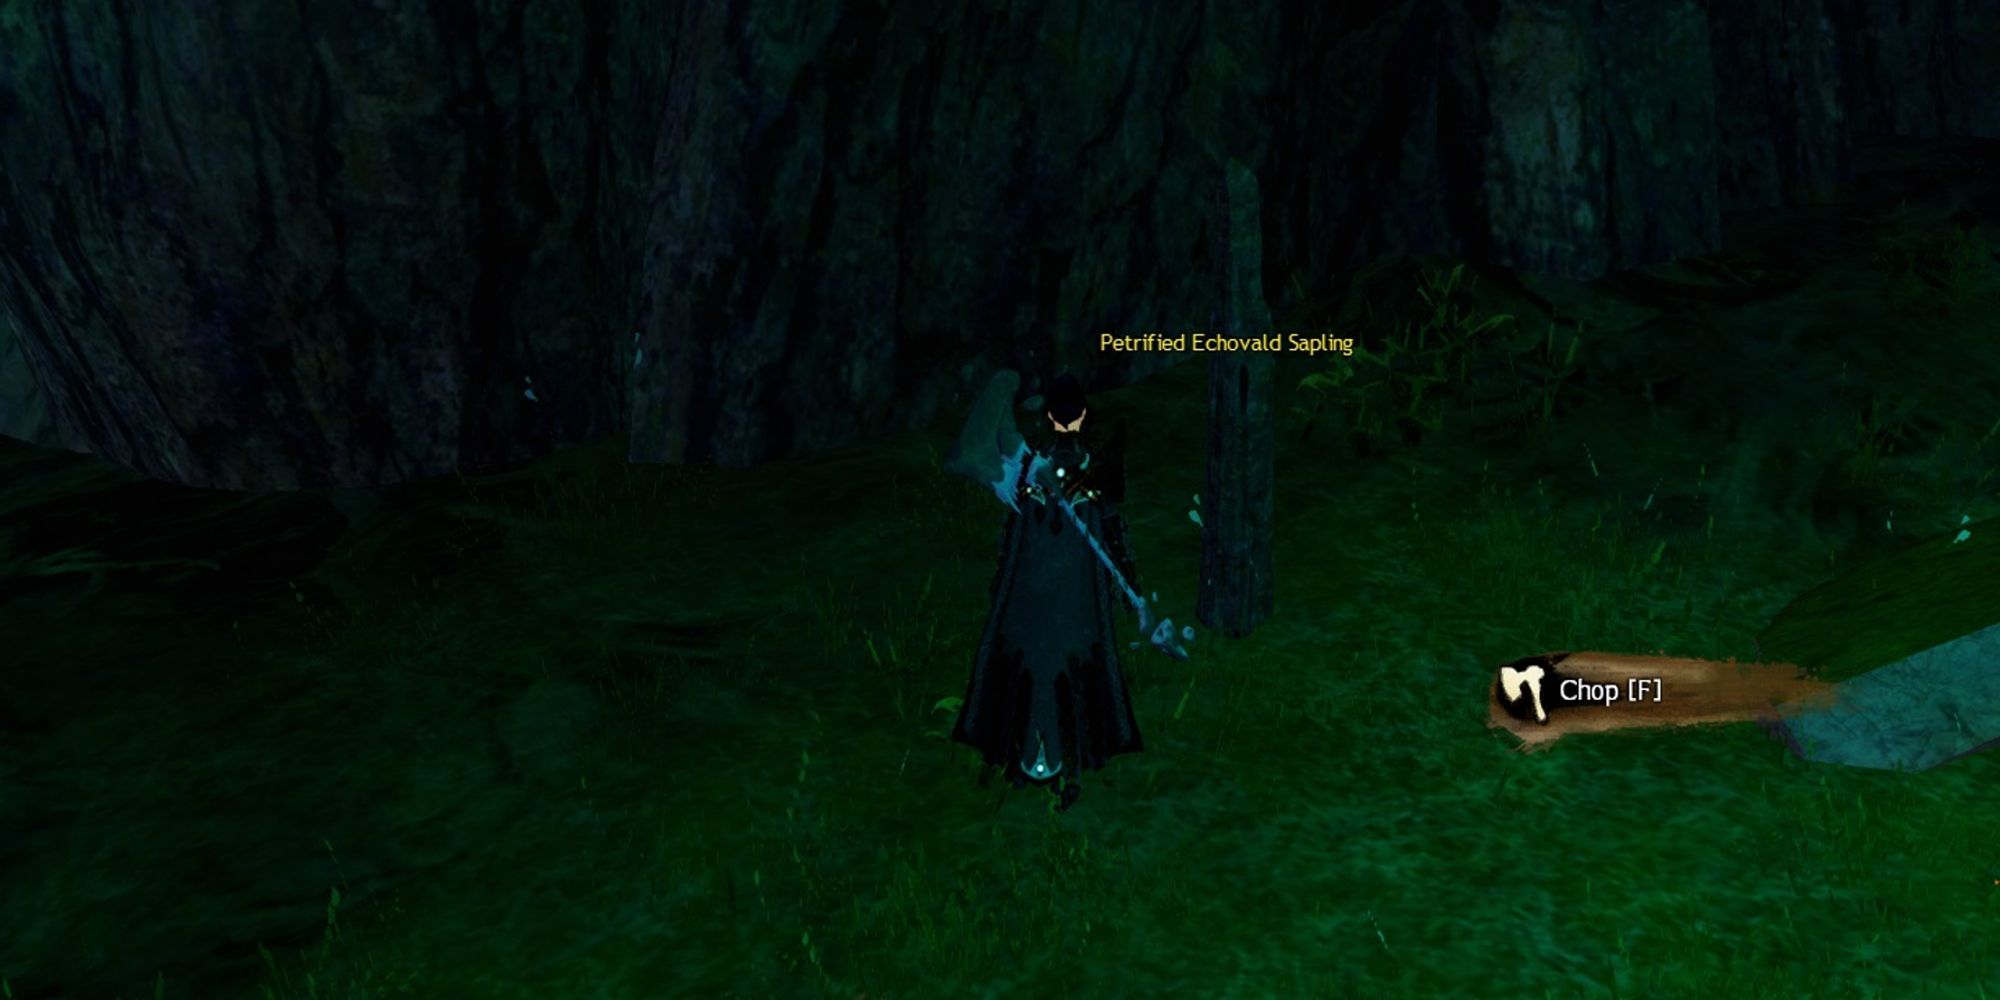 player standing next to a petrified echovald sapling